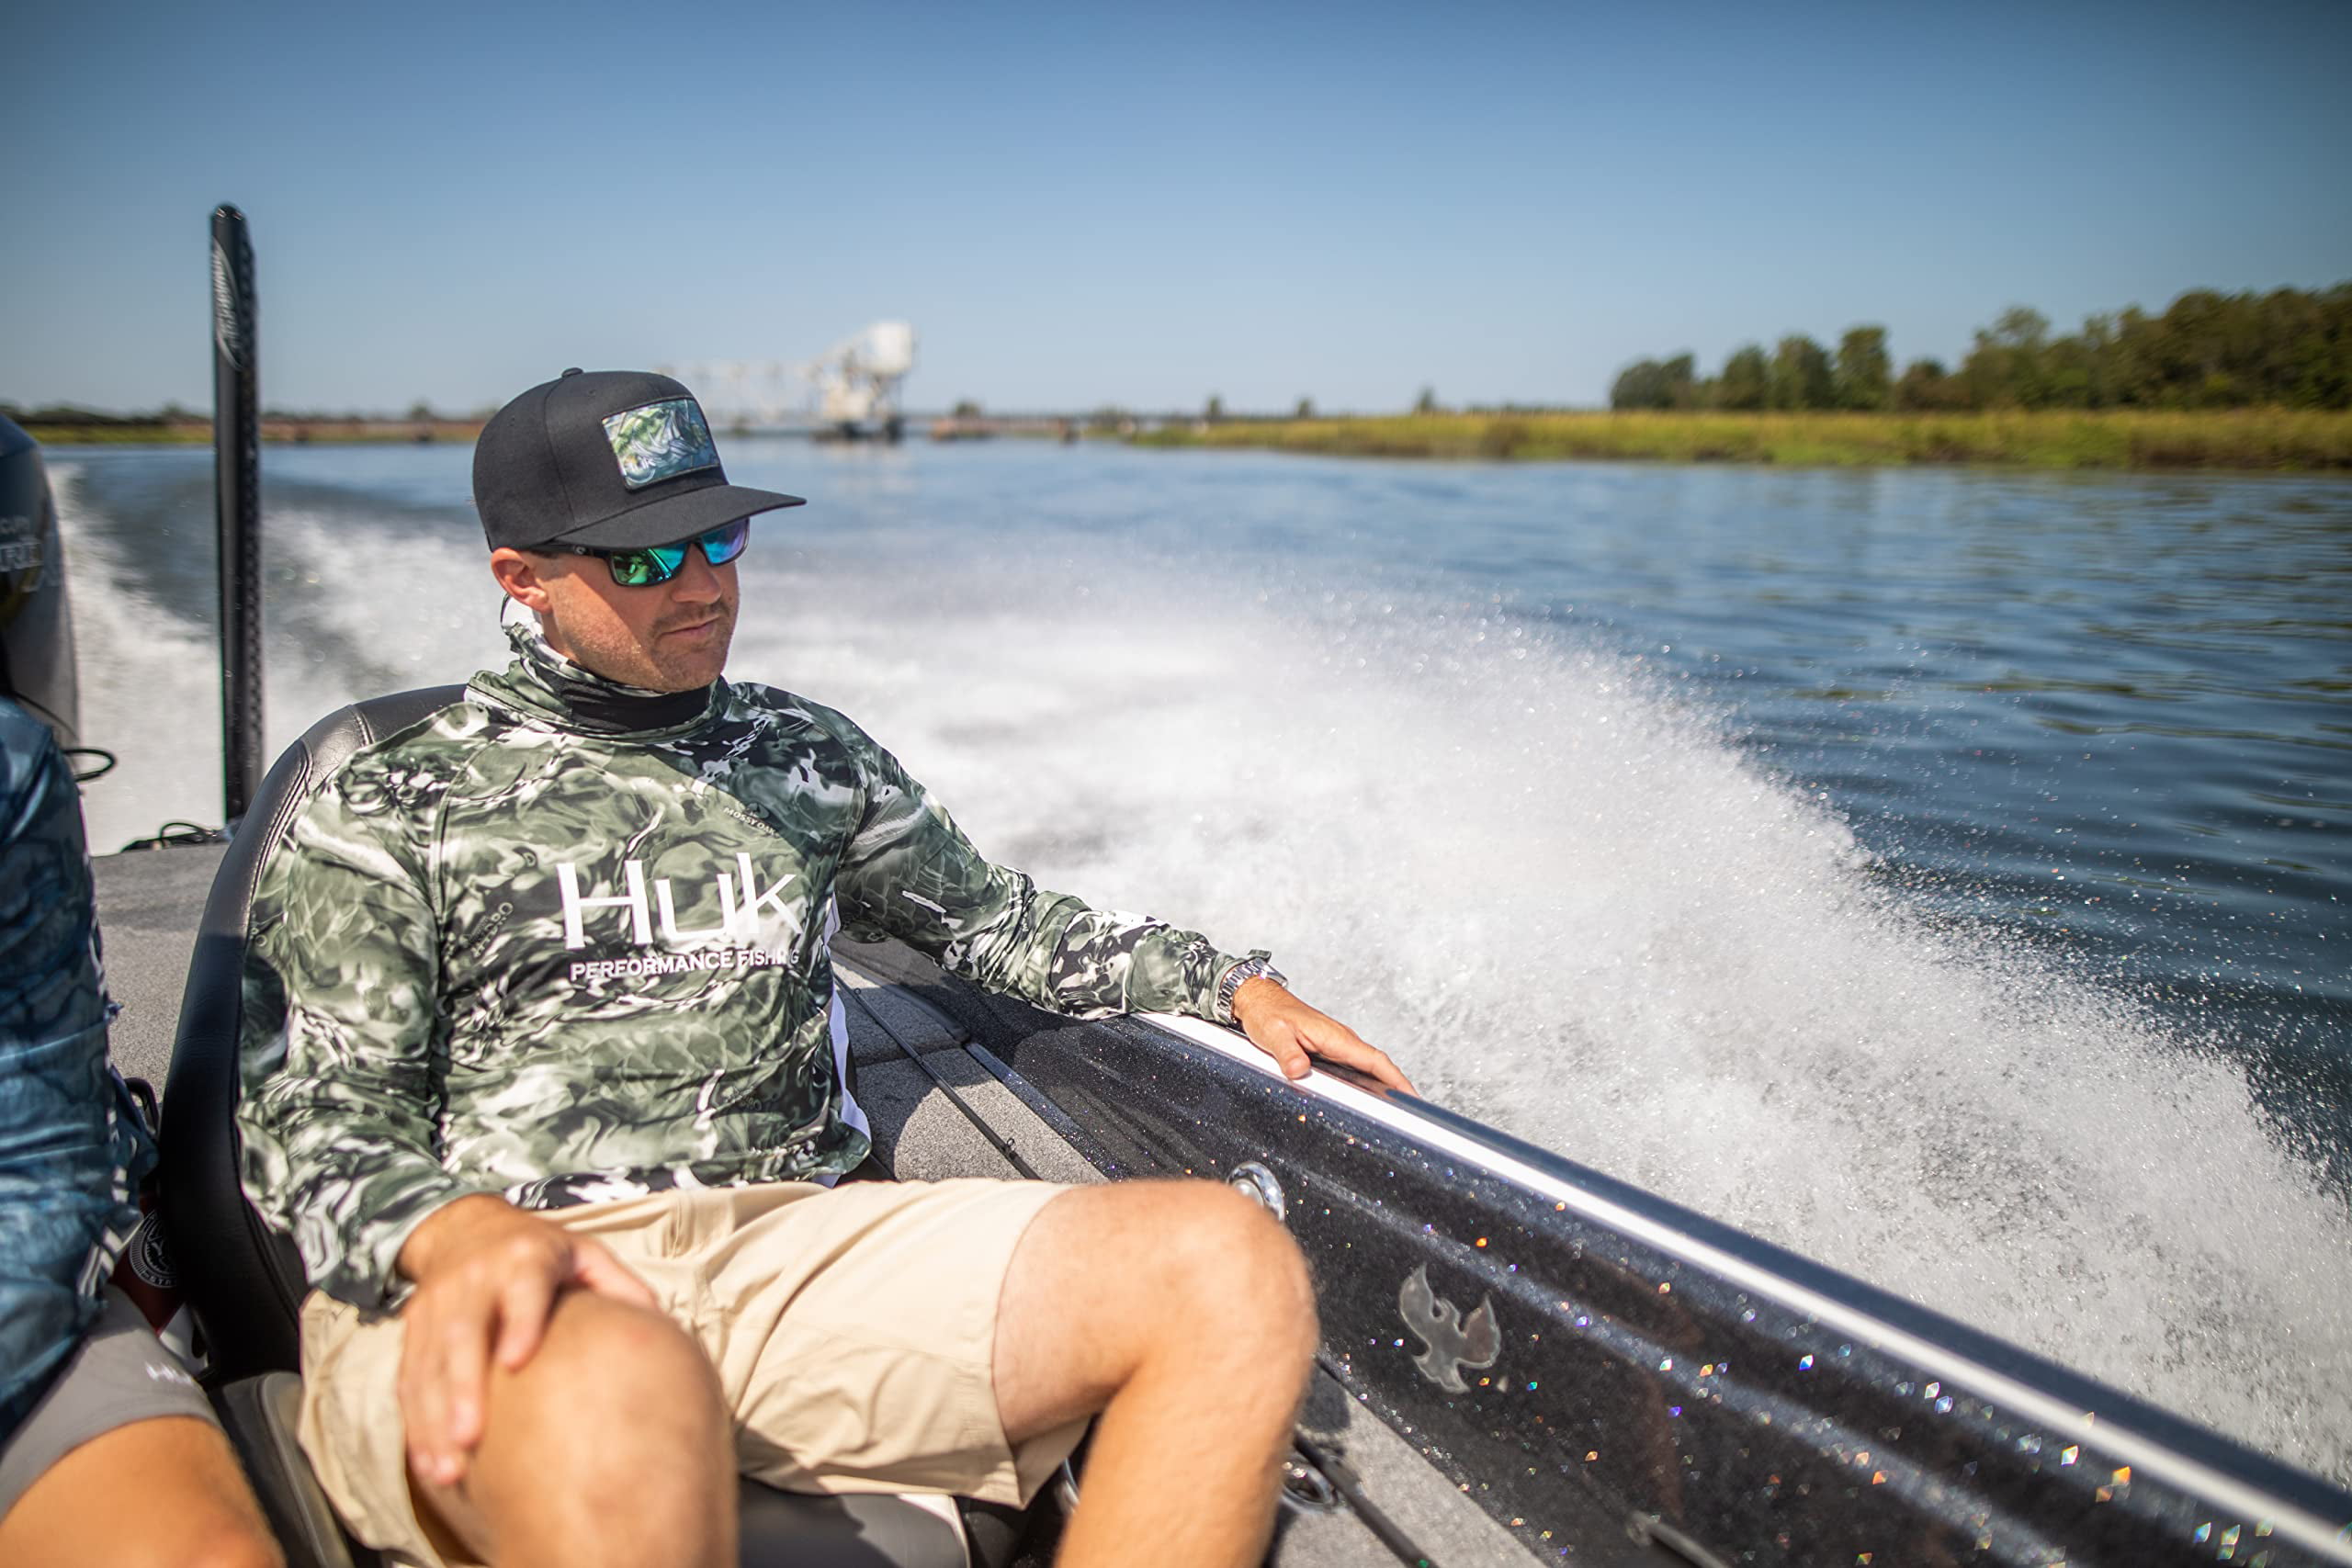 Camo Long Sleeve Performance Fishing Shirt With +30 UPF Sun Protection Huk Mens Mossy Oak Pursuit Long Sleeve Shirt 2X-Large Mossy Oak Hydro Freshwater